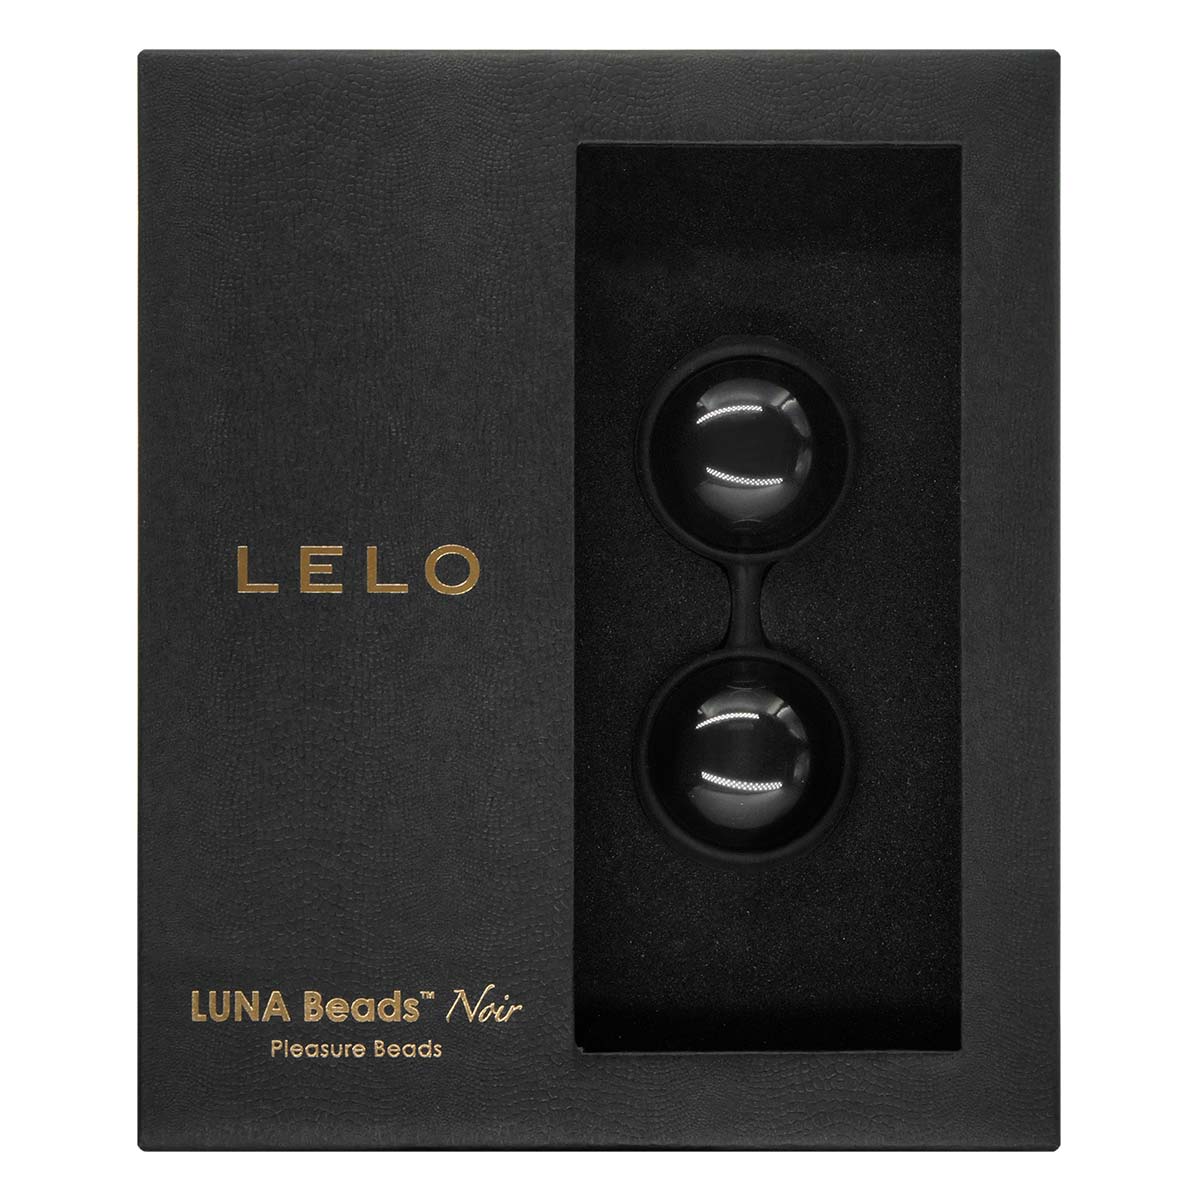 LELO Luna Beads Noir 健康情趣縮陰球-p_2